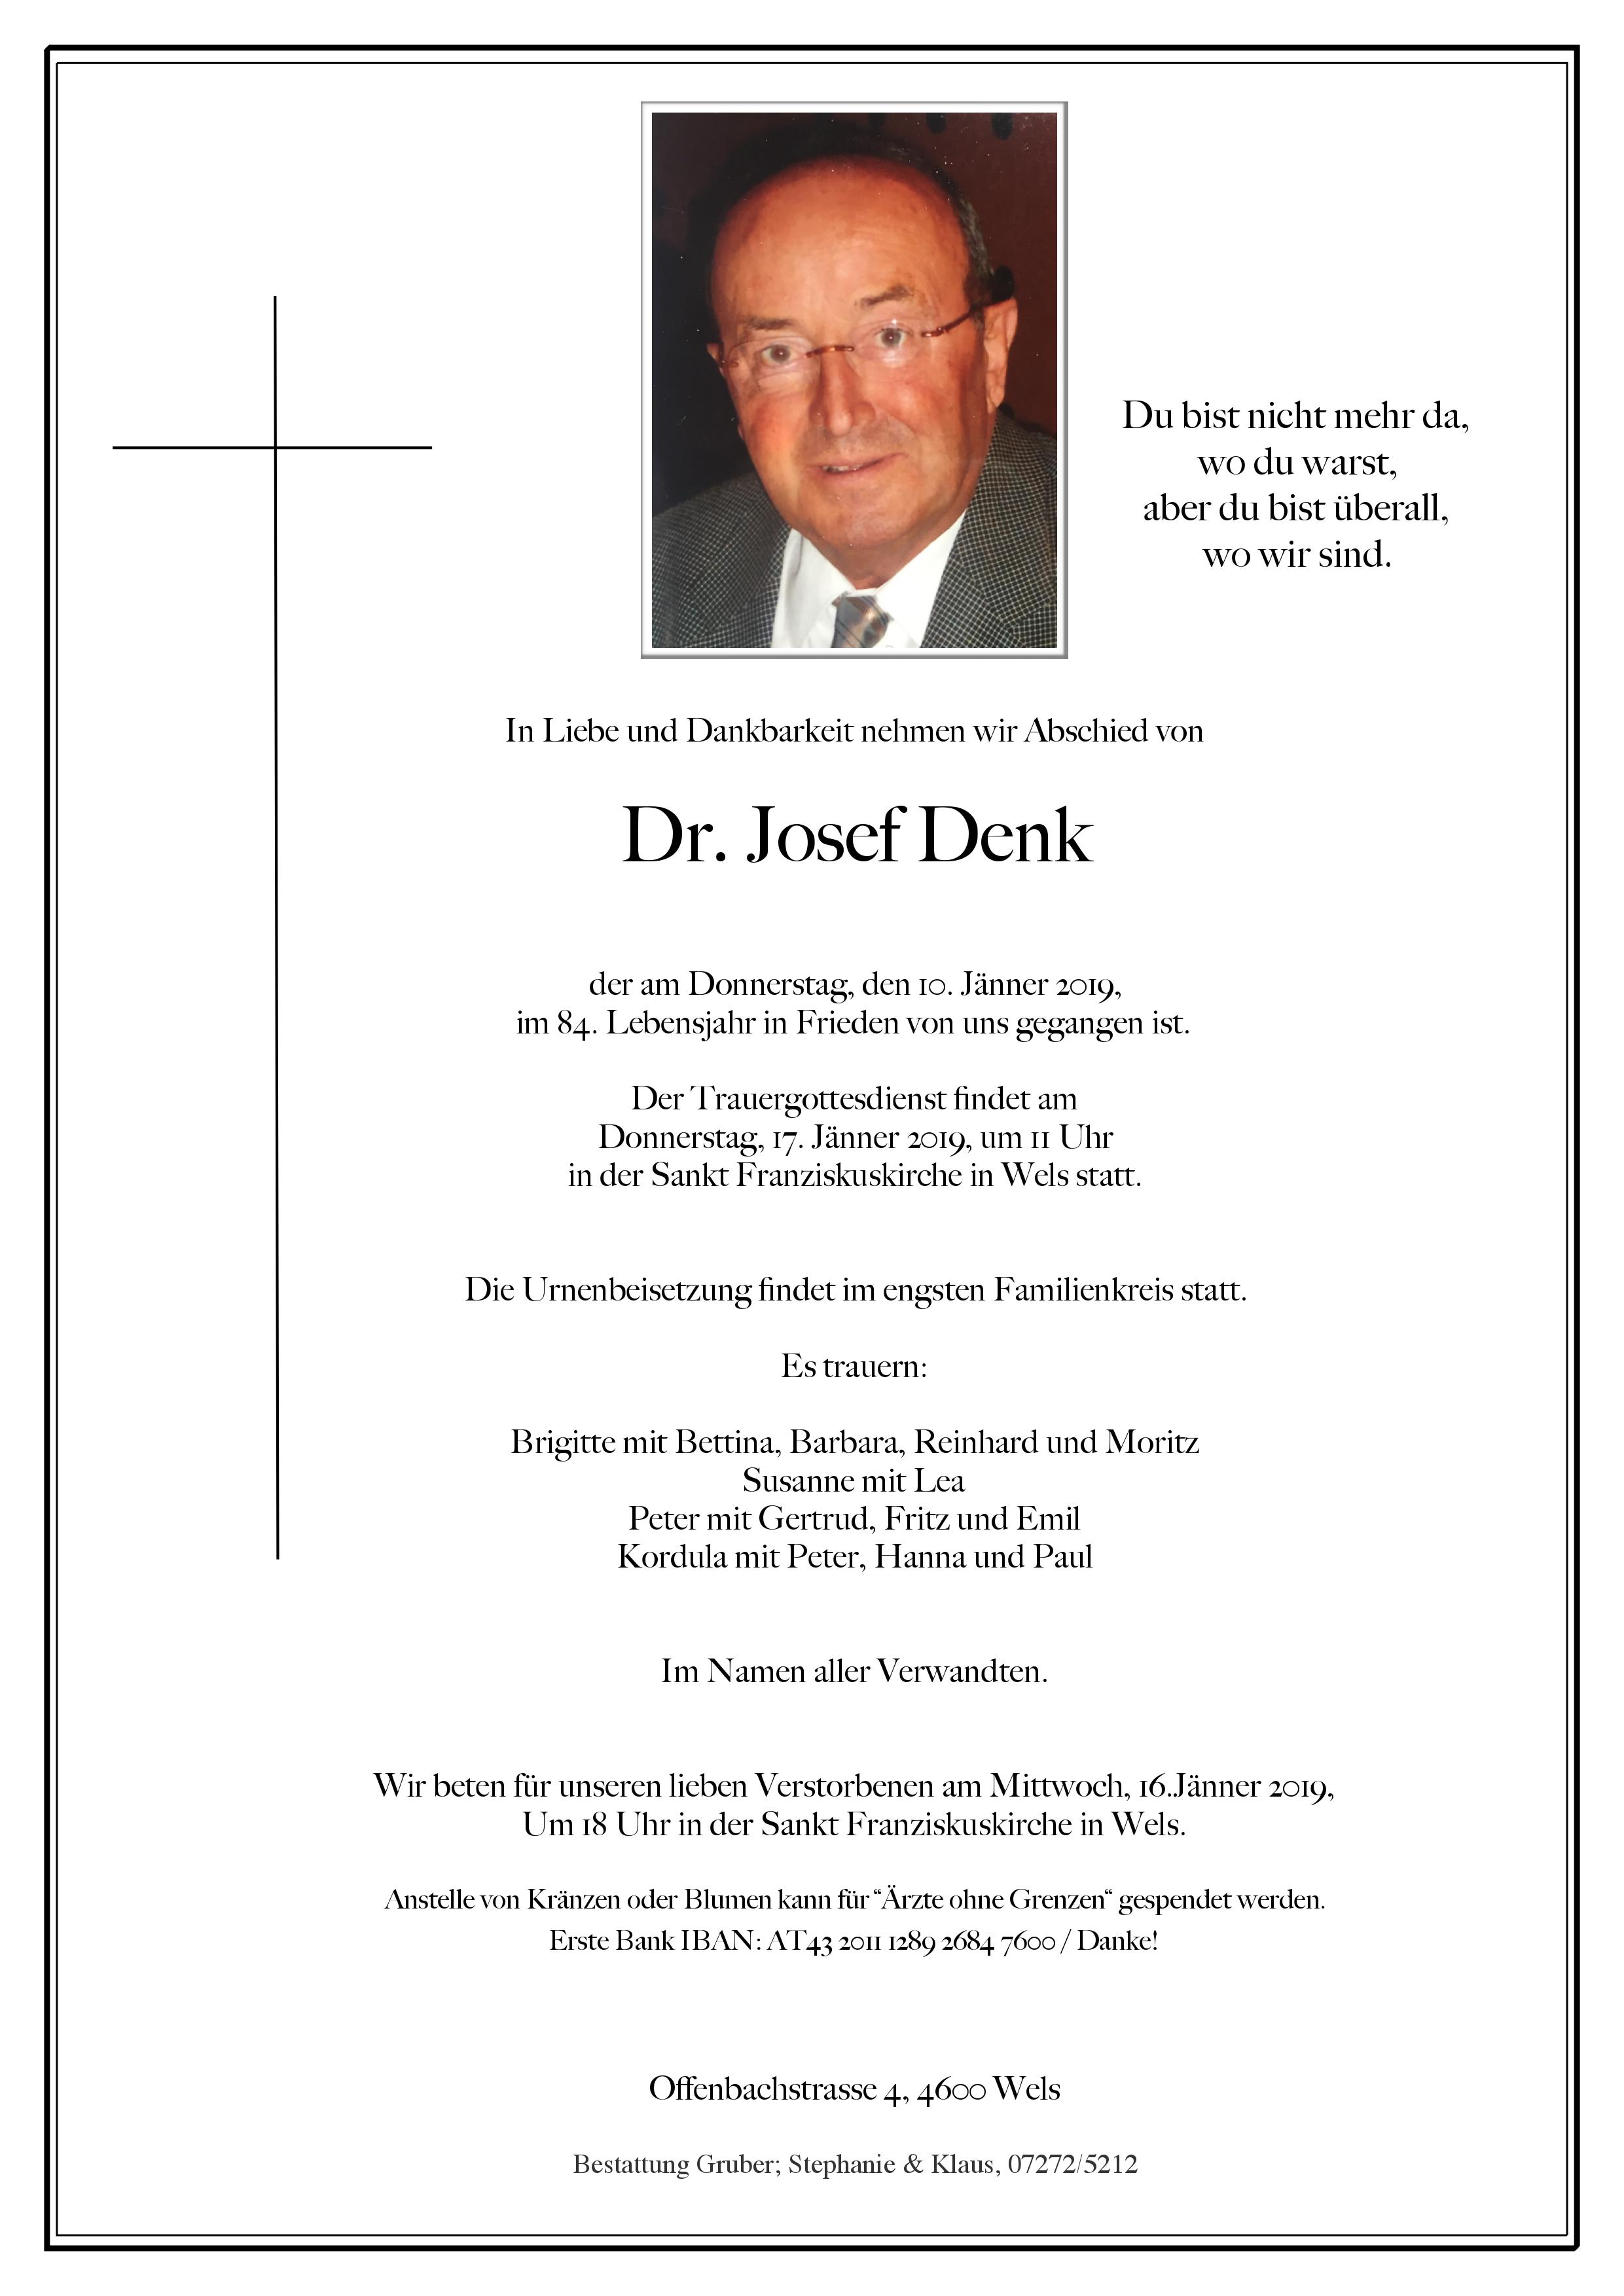 Dr. Josef Denk (Wels)